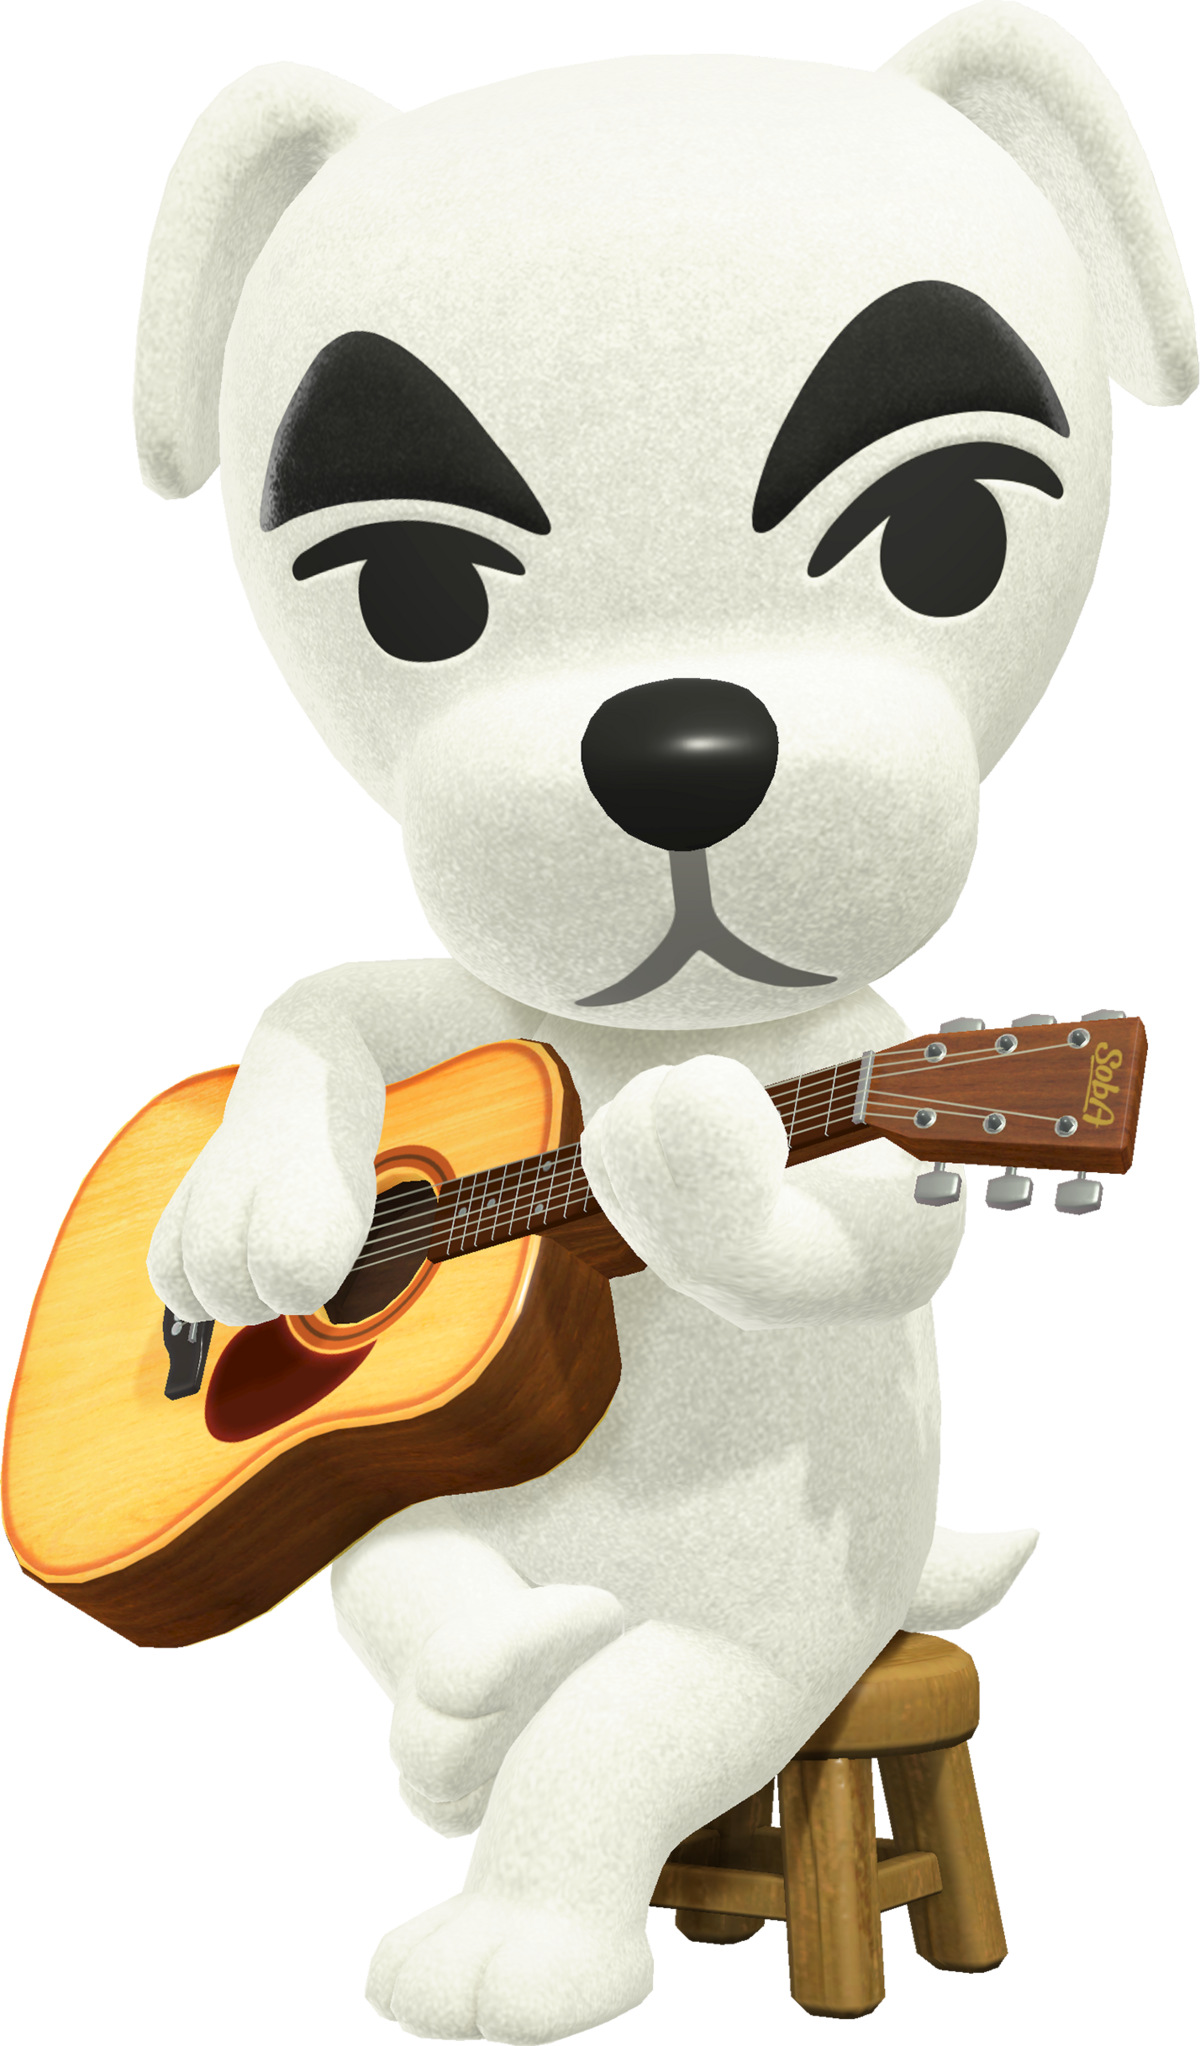 List Of K K Slider Songs Nookipedia The Animal Crossing Wiki